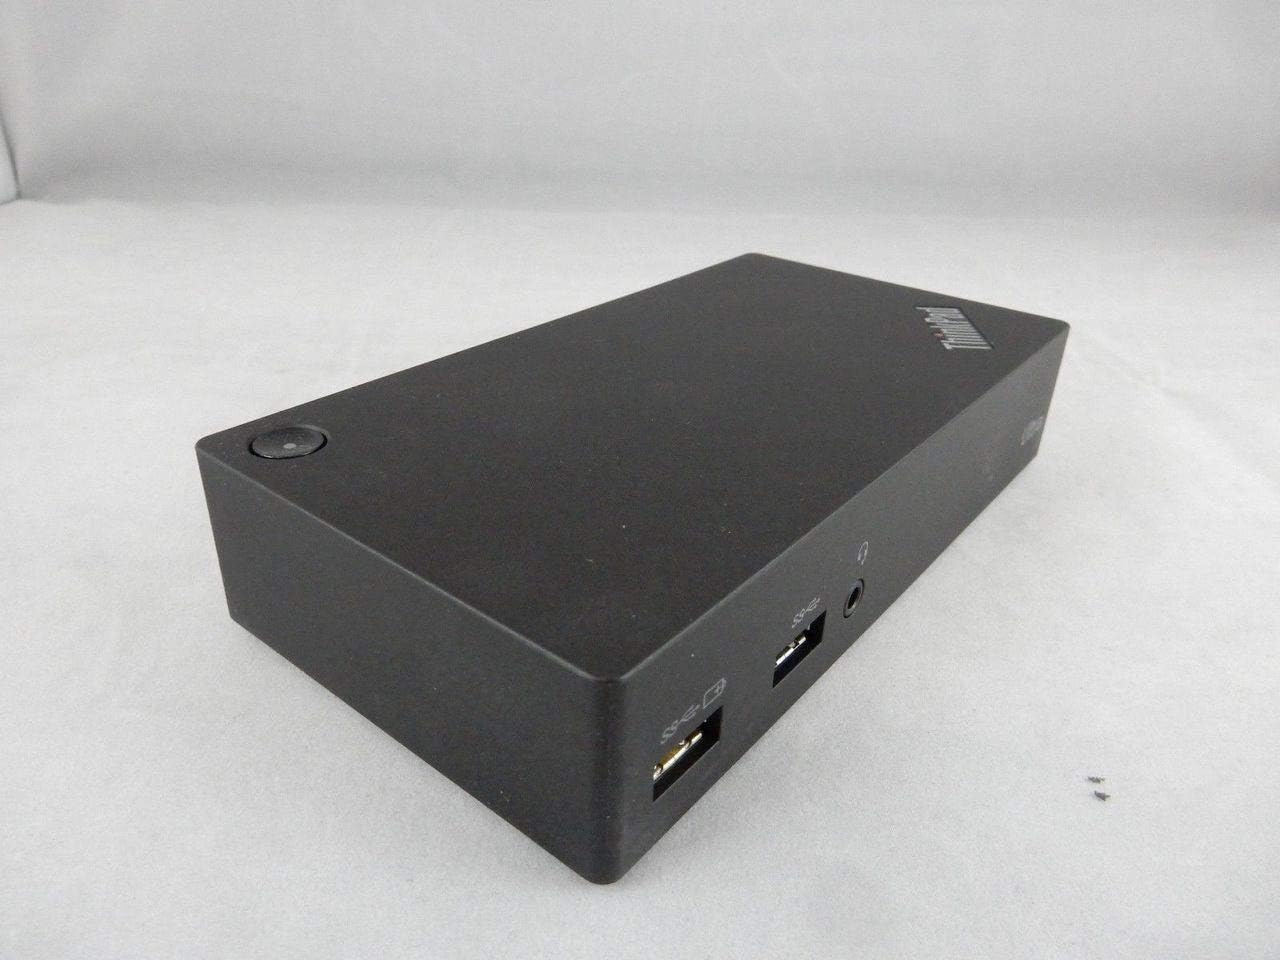 Lenovo Thinkpad Ultra Dock 40A80045US USB 3.0, USB 2.0, HDMI, Display Port